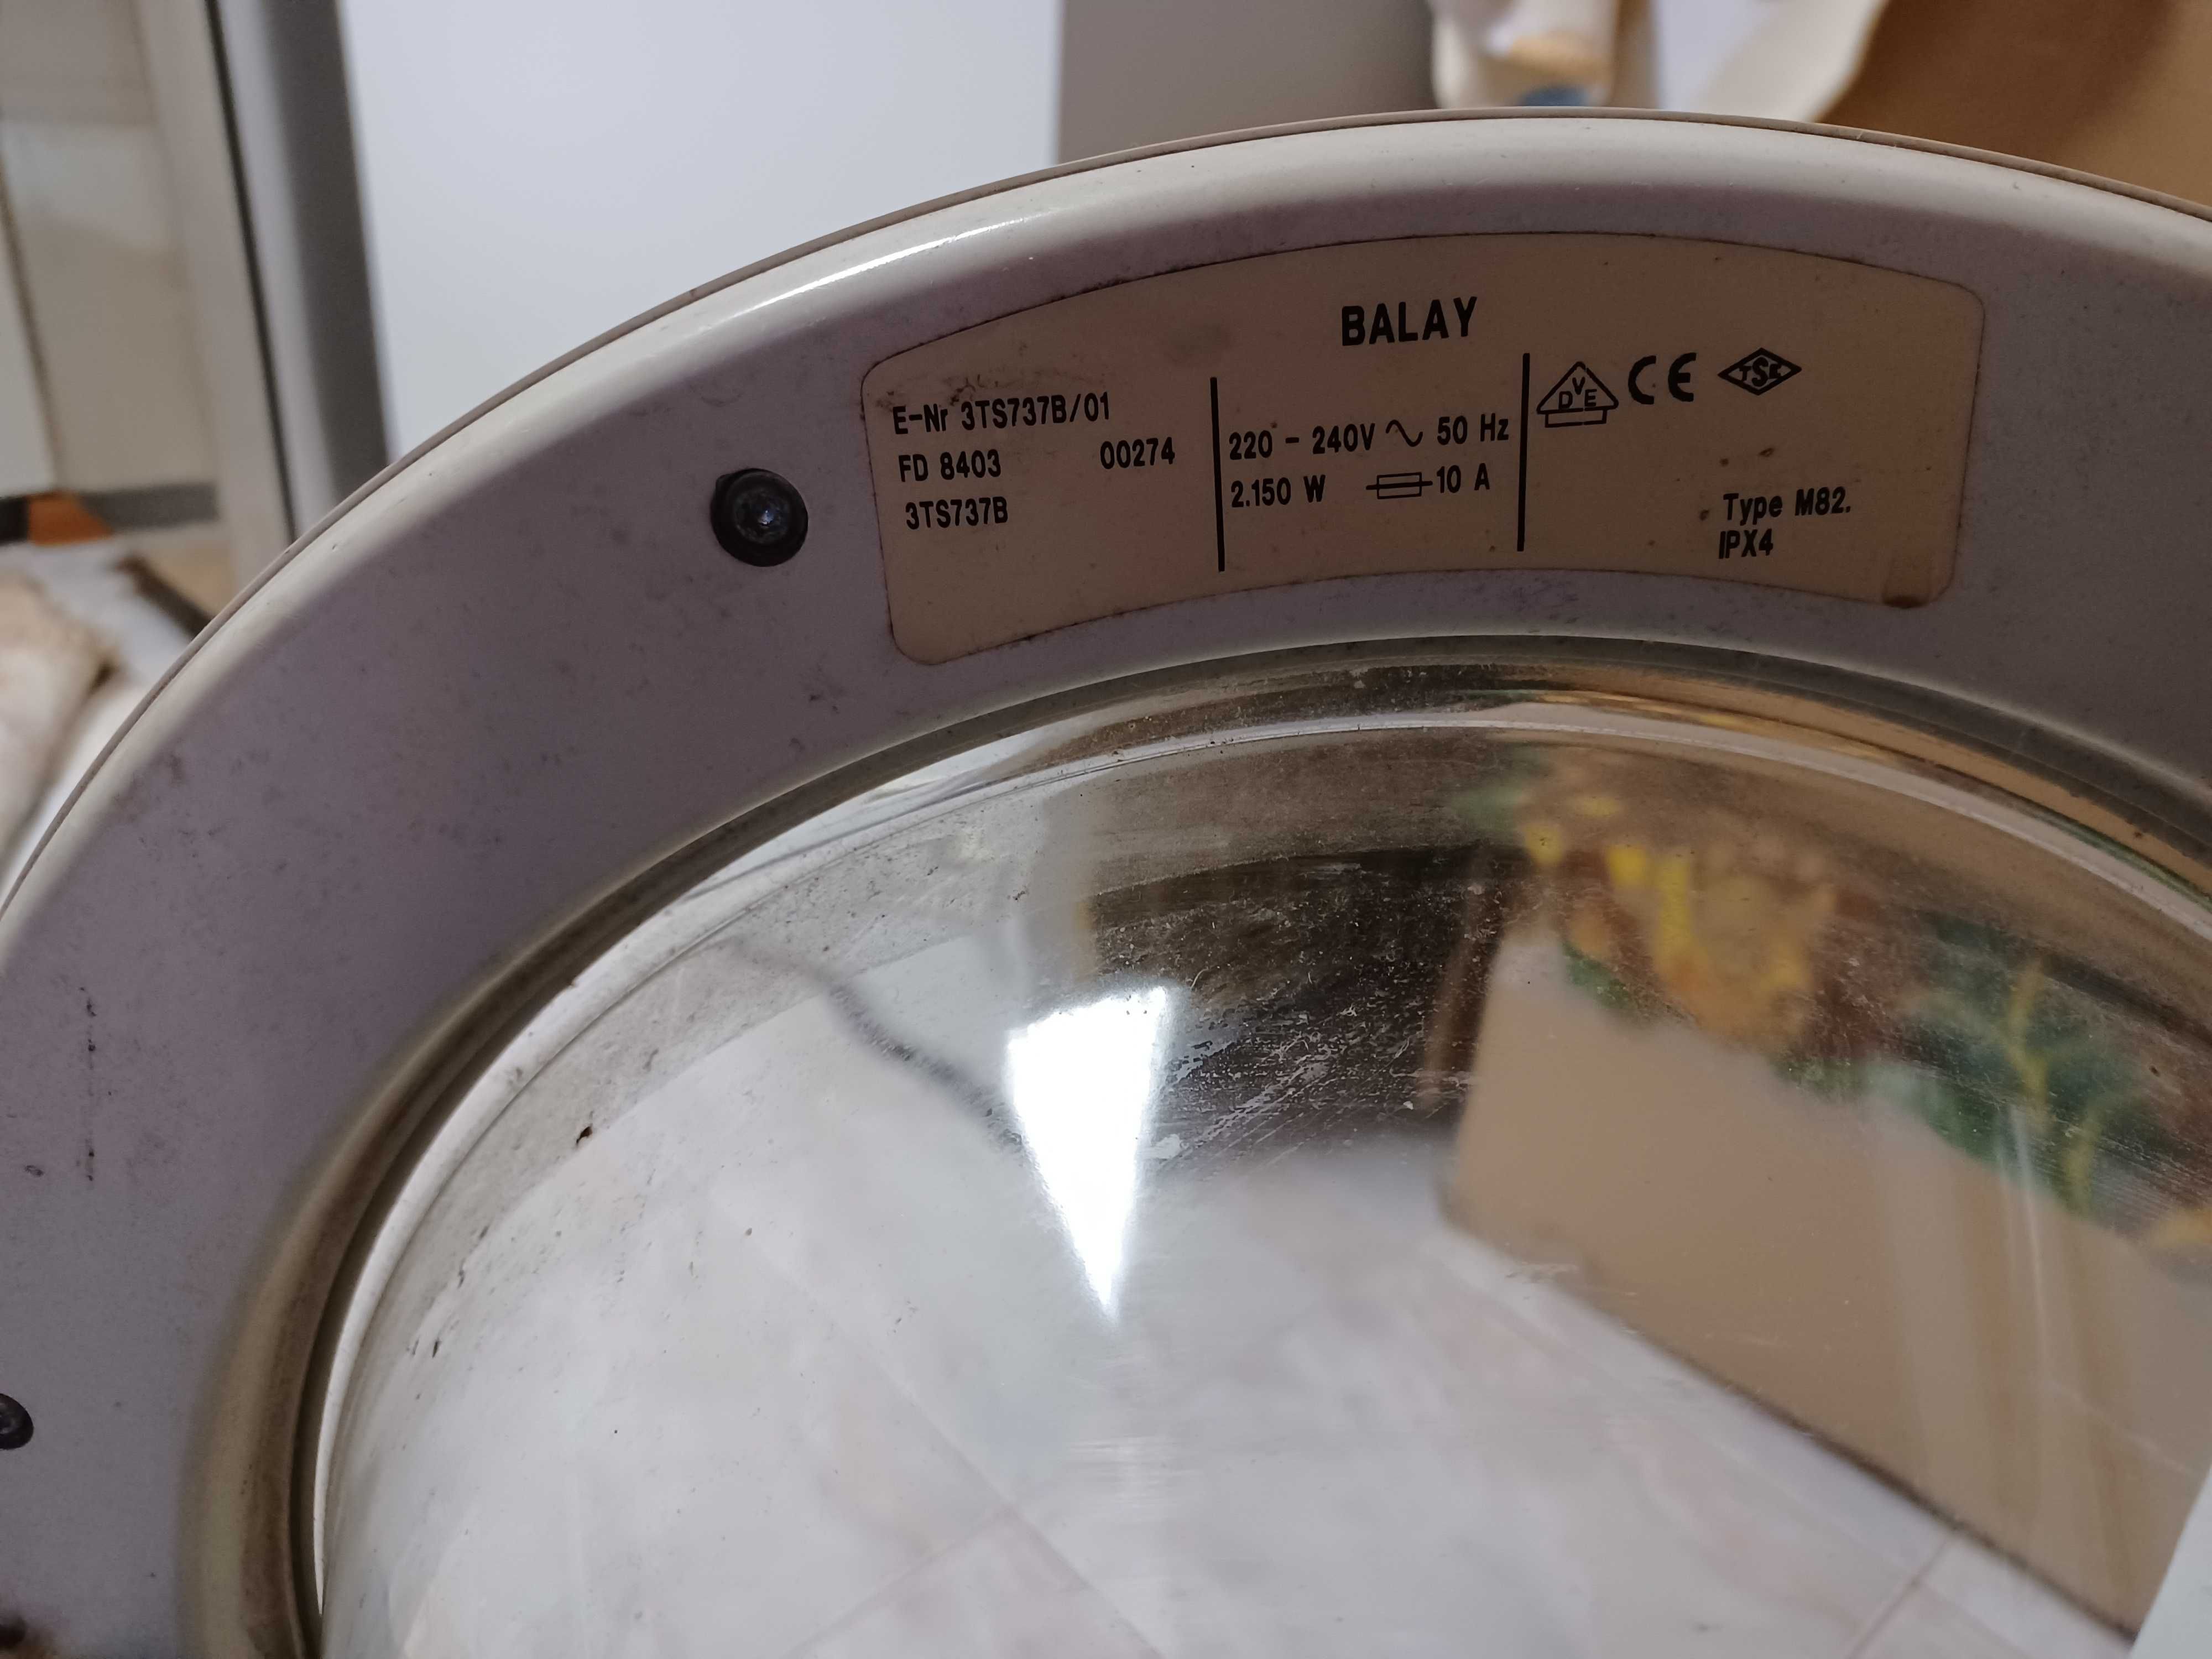 Maquina Lavar Roupa Balay TS6010 - Desmontada